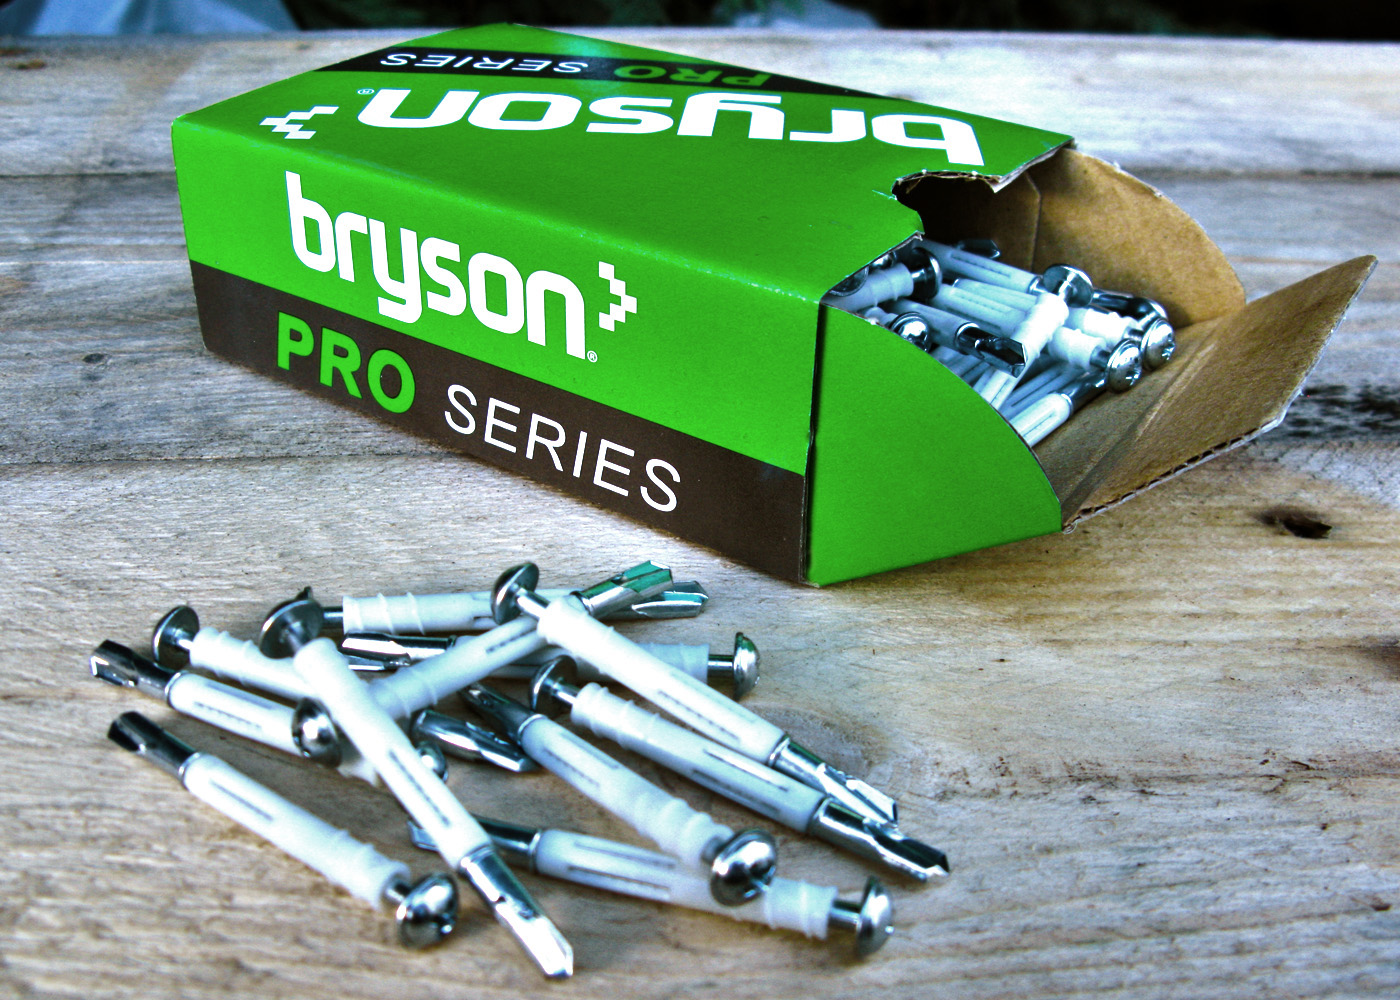 adhesive construction package design  London Bryson tools building hilti screws Retail screwfix Mining trade series Pro Series spray